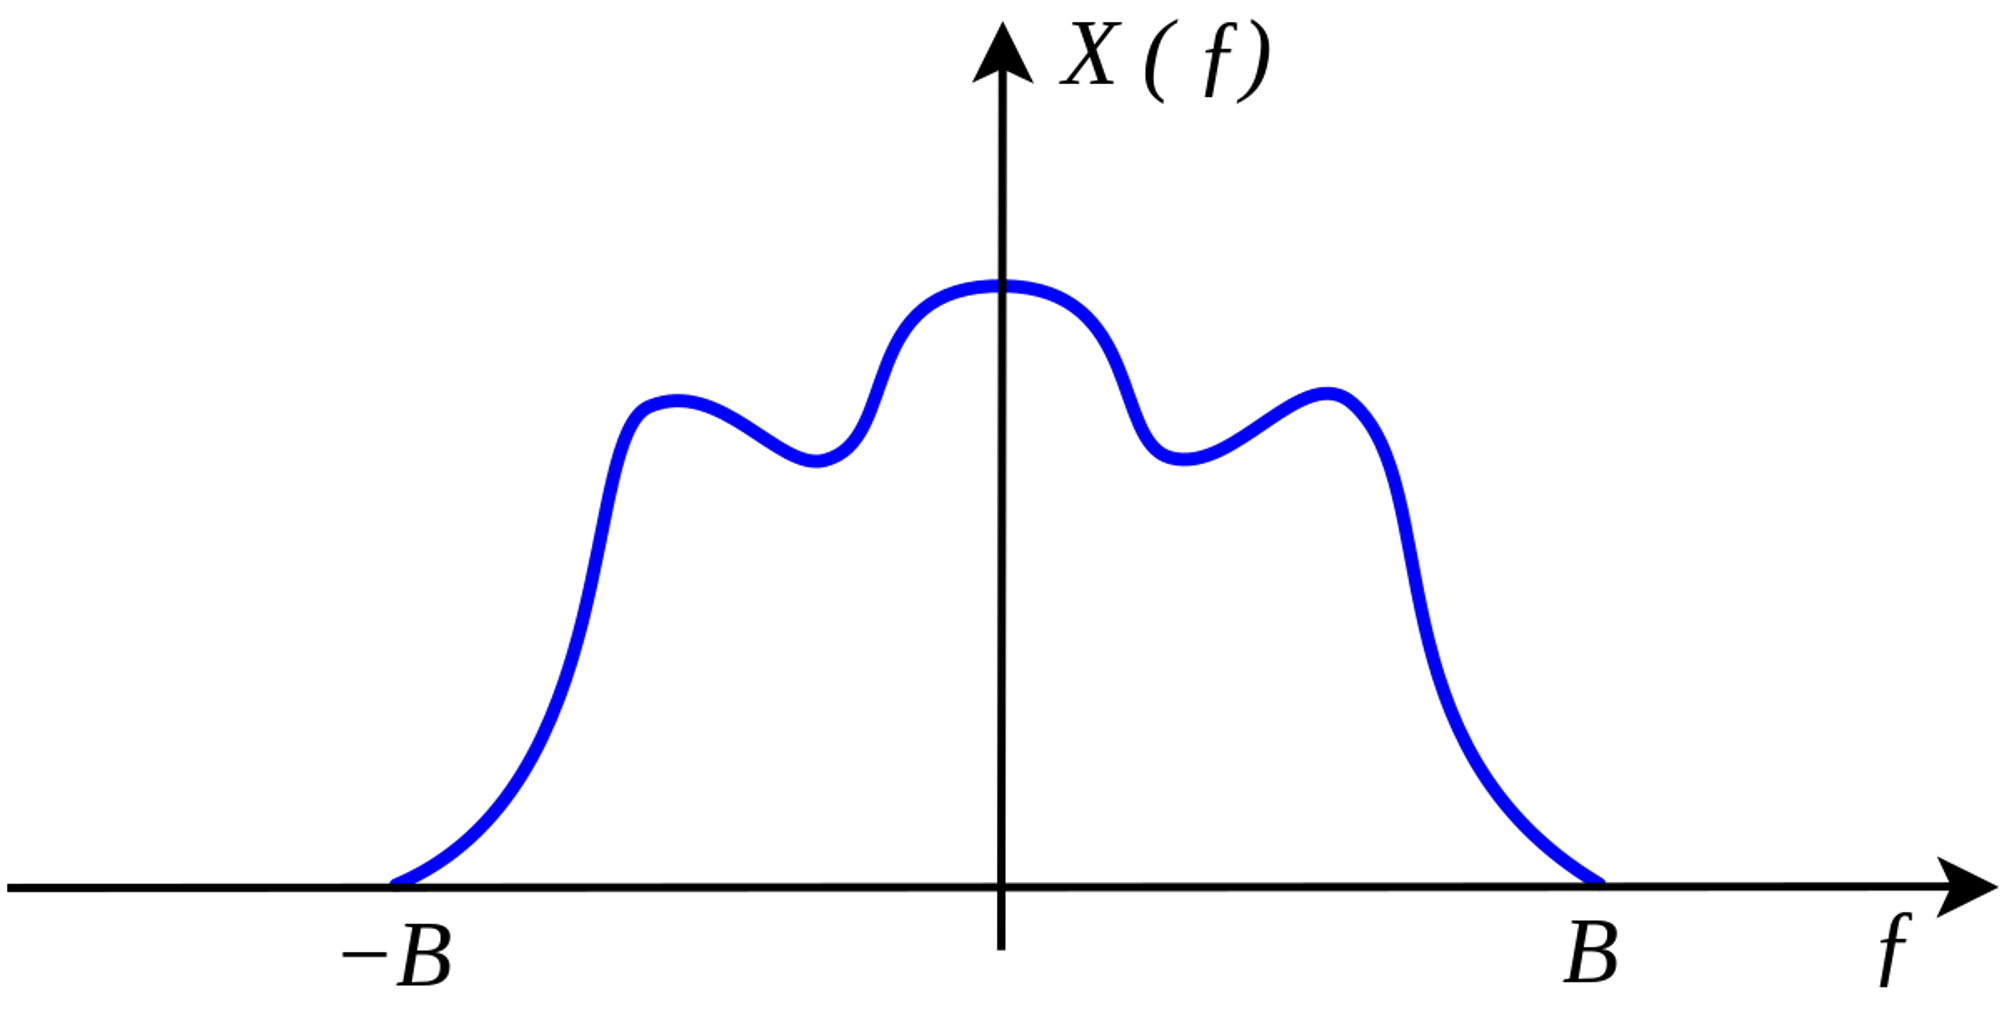 Nyquist–Shannon sampling theorem